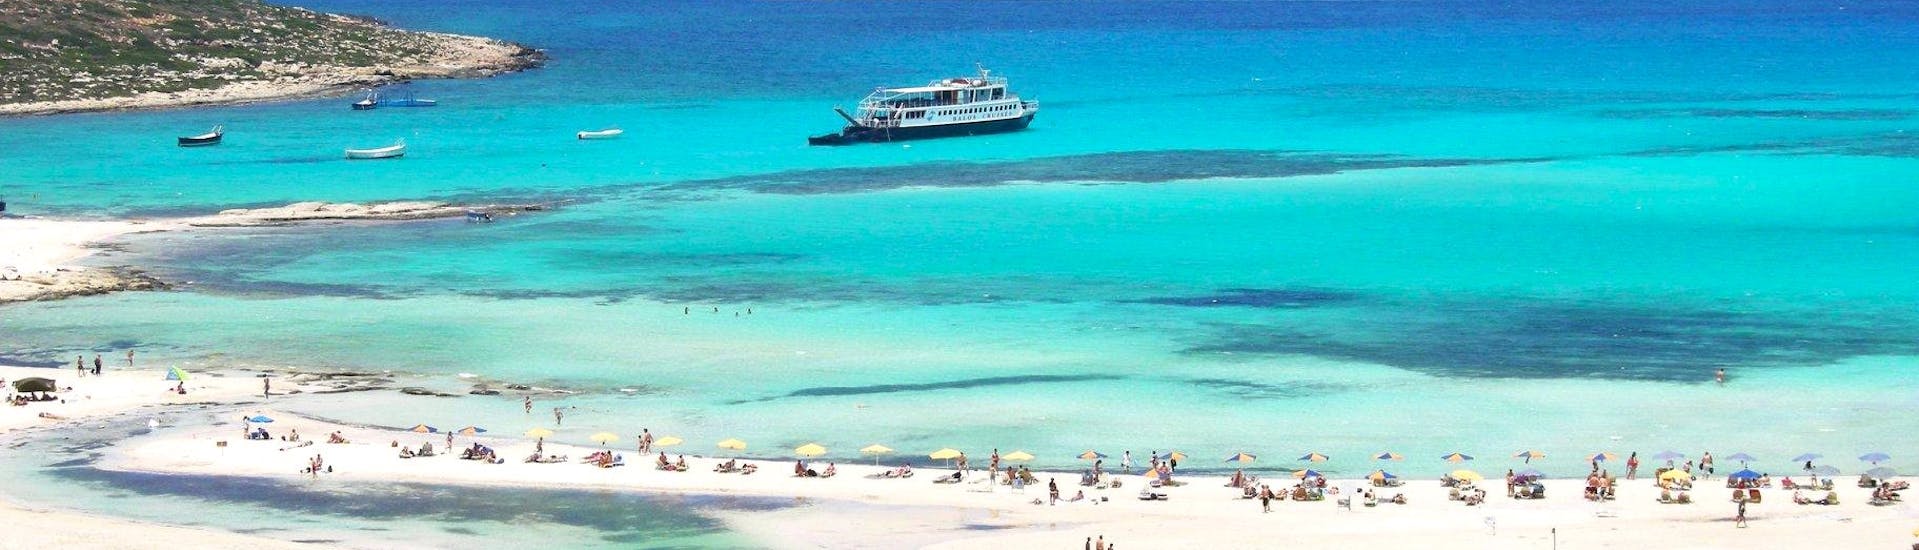 The beautiful Balos Lagoon during a boat trip to Balos & Gramvousa from Kissamos with Cretan Daily Cruises.